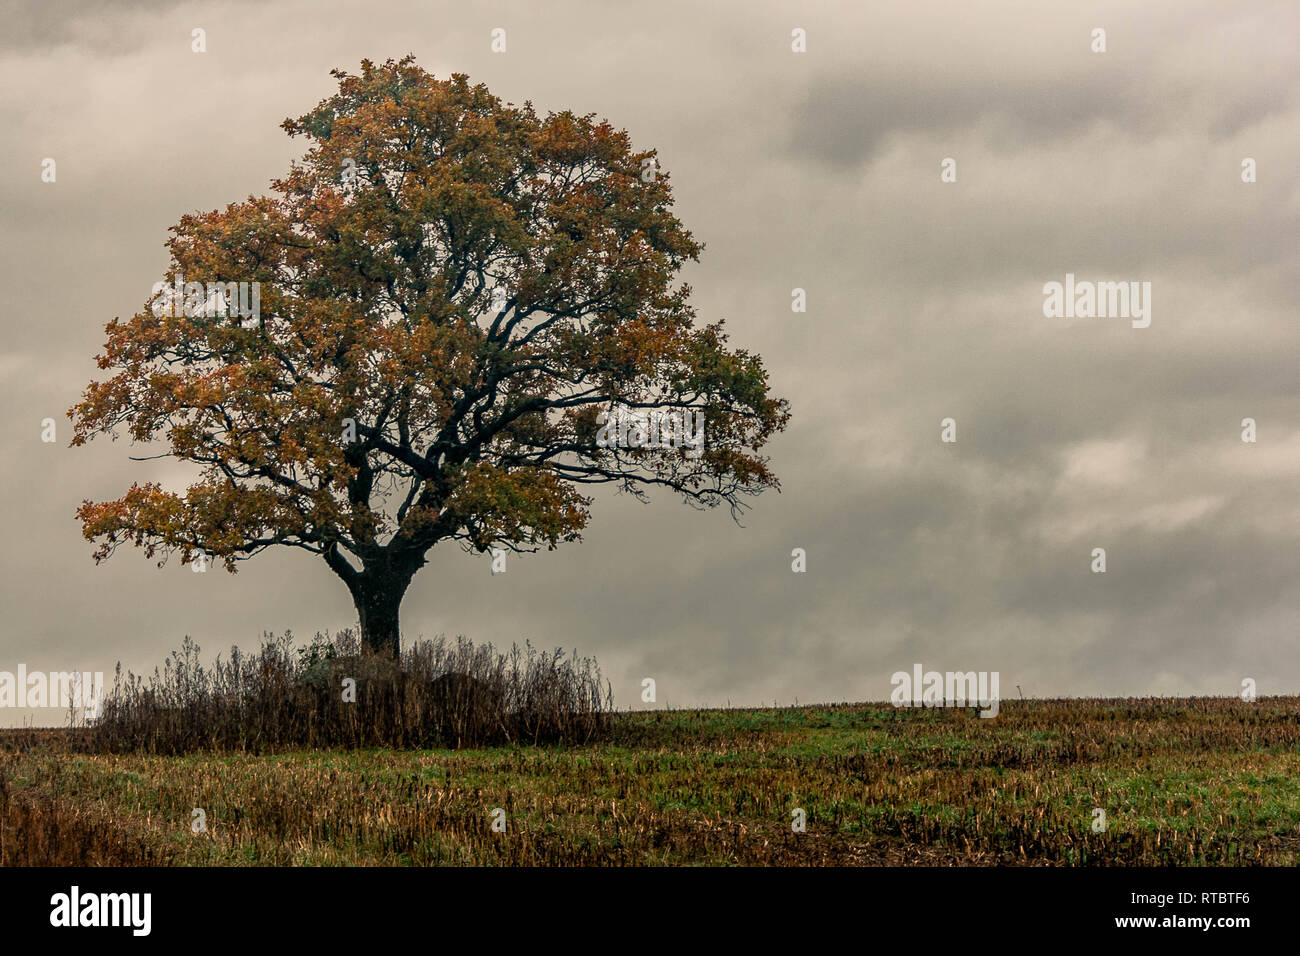 Autumn scene of single oak tree growing on a harvested crop field in Latvia. Stock Photo